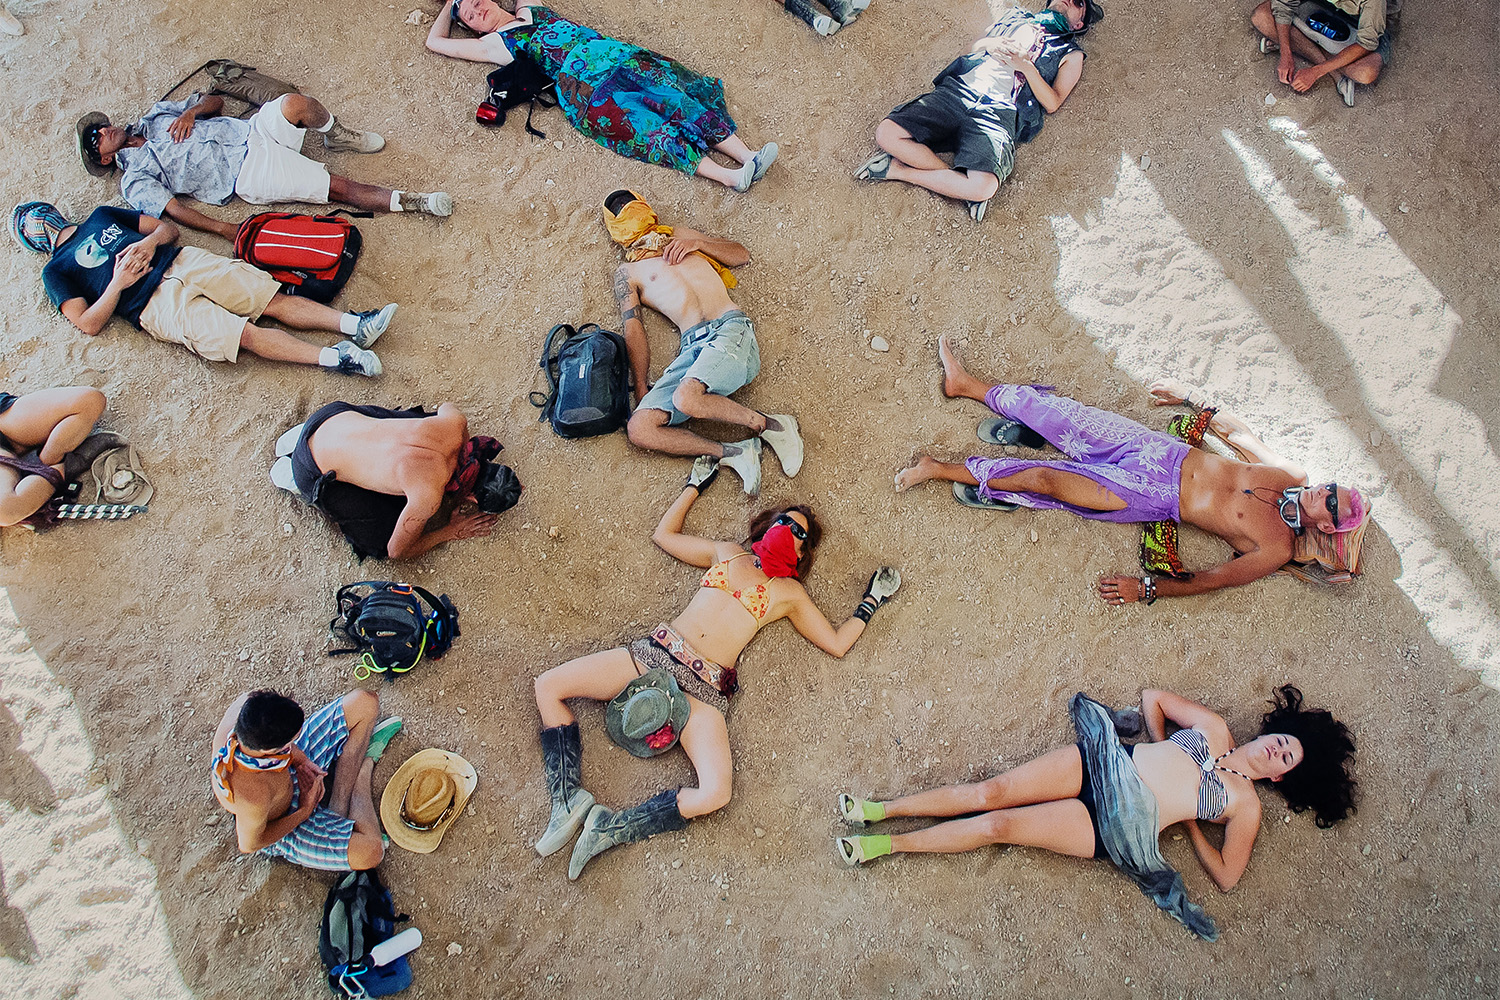 Festival-goers at Burning Man